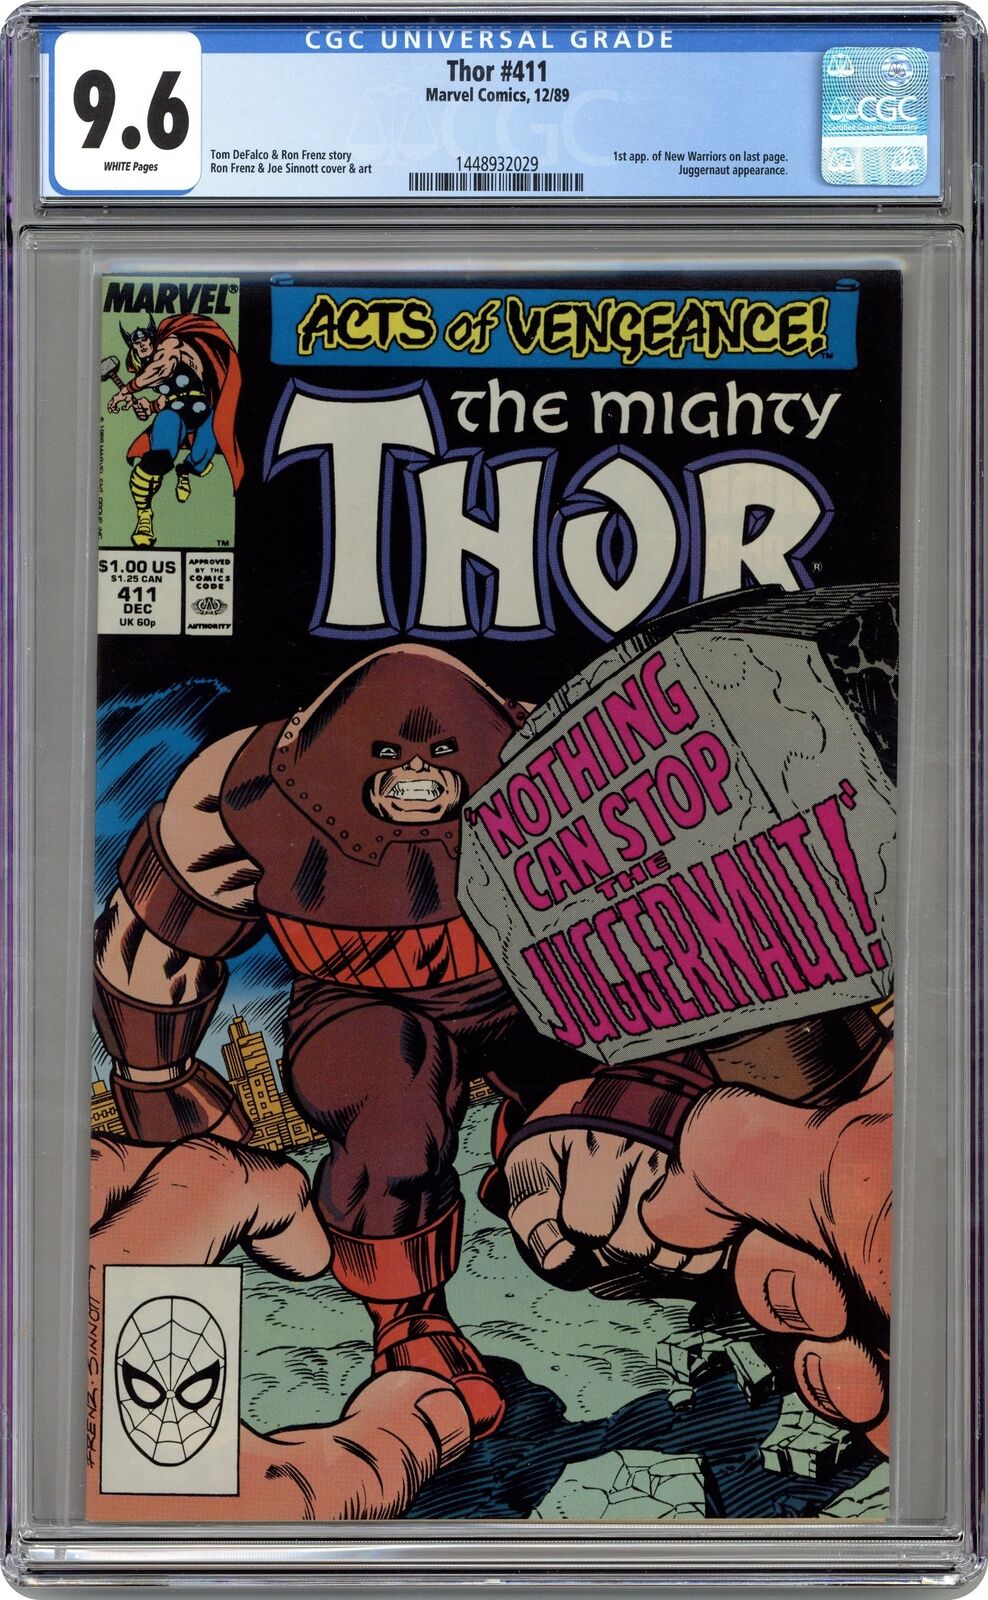 Thor #411 CGC 9.6 1989 1448932029 1st New Warriors (cameo)